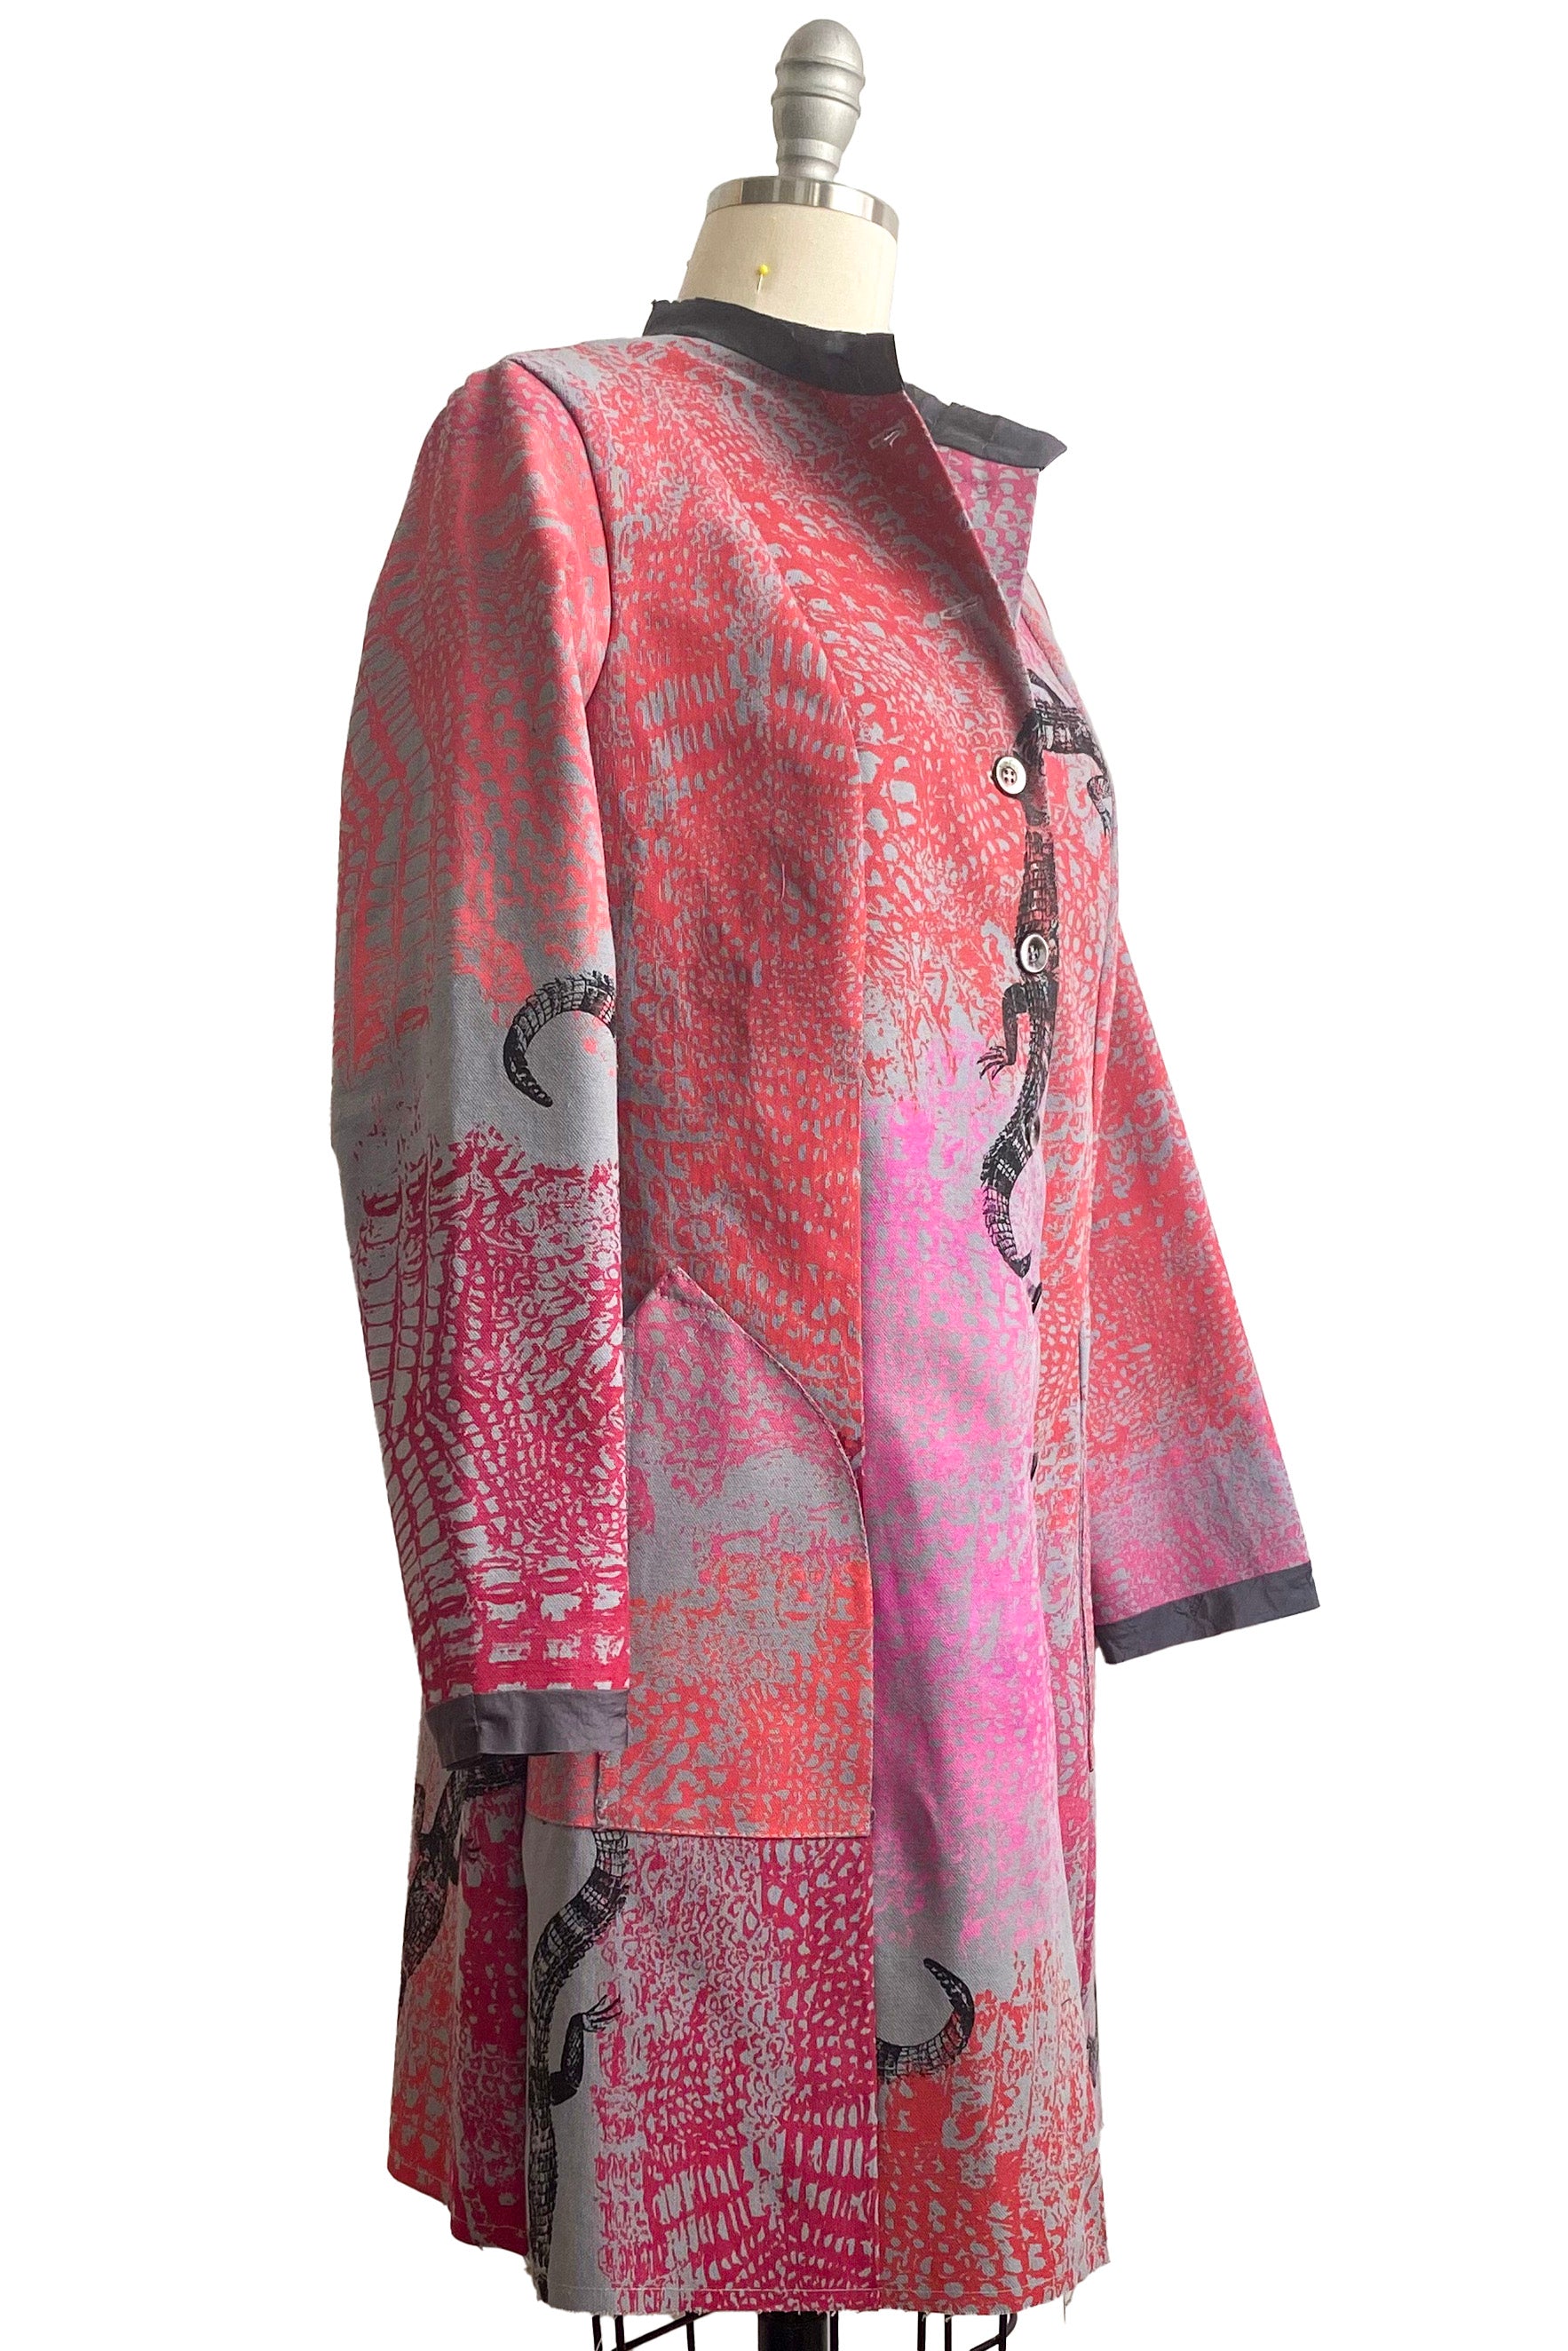 Hampton Coat in Linen w/ Alligator Print - Pink & Grey - Small